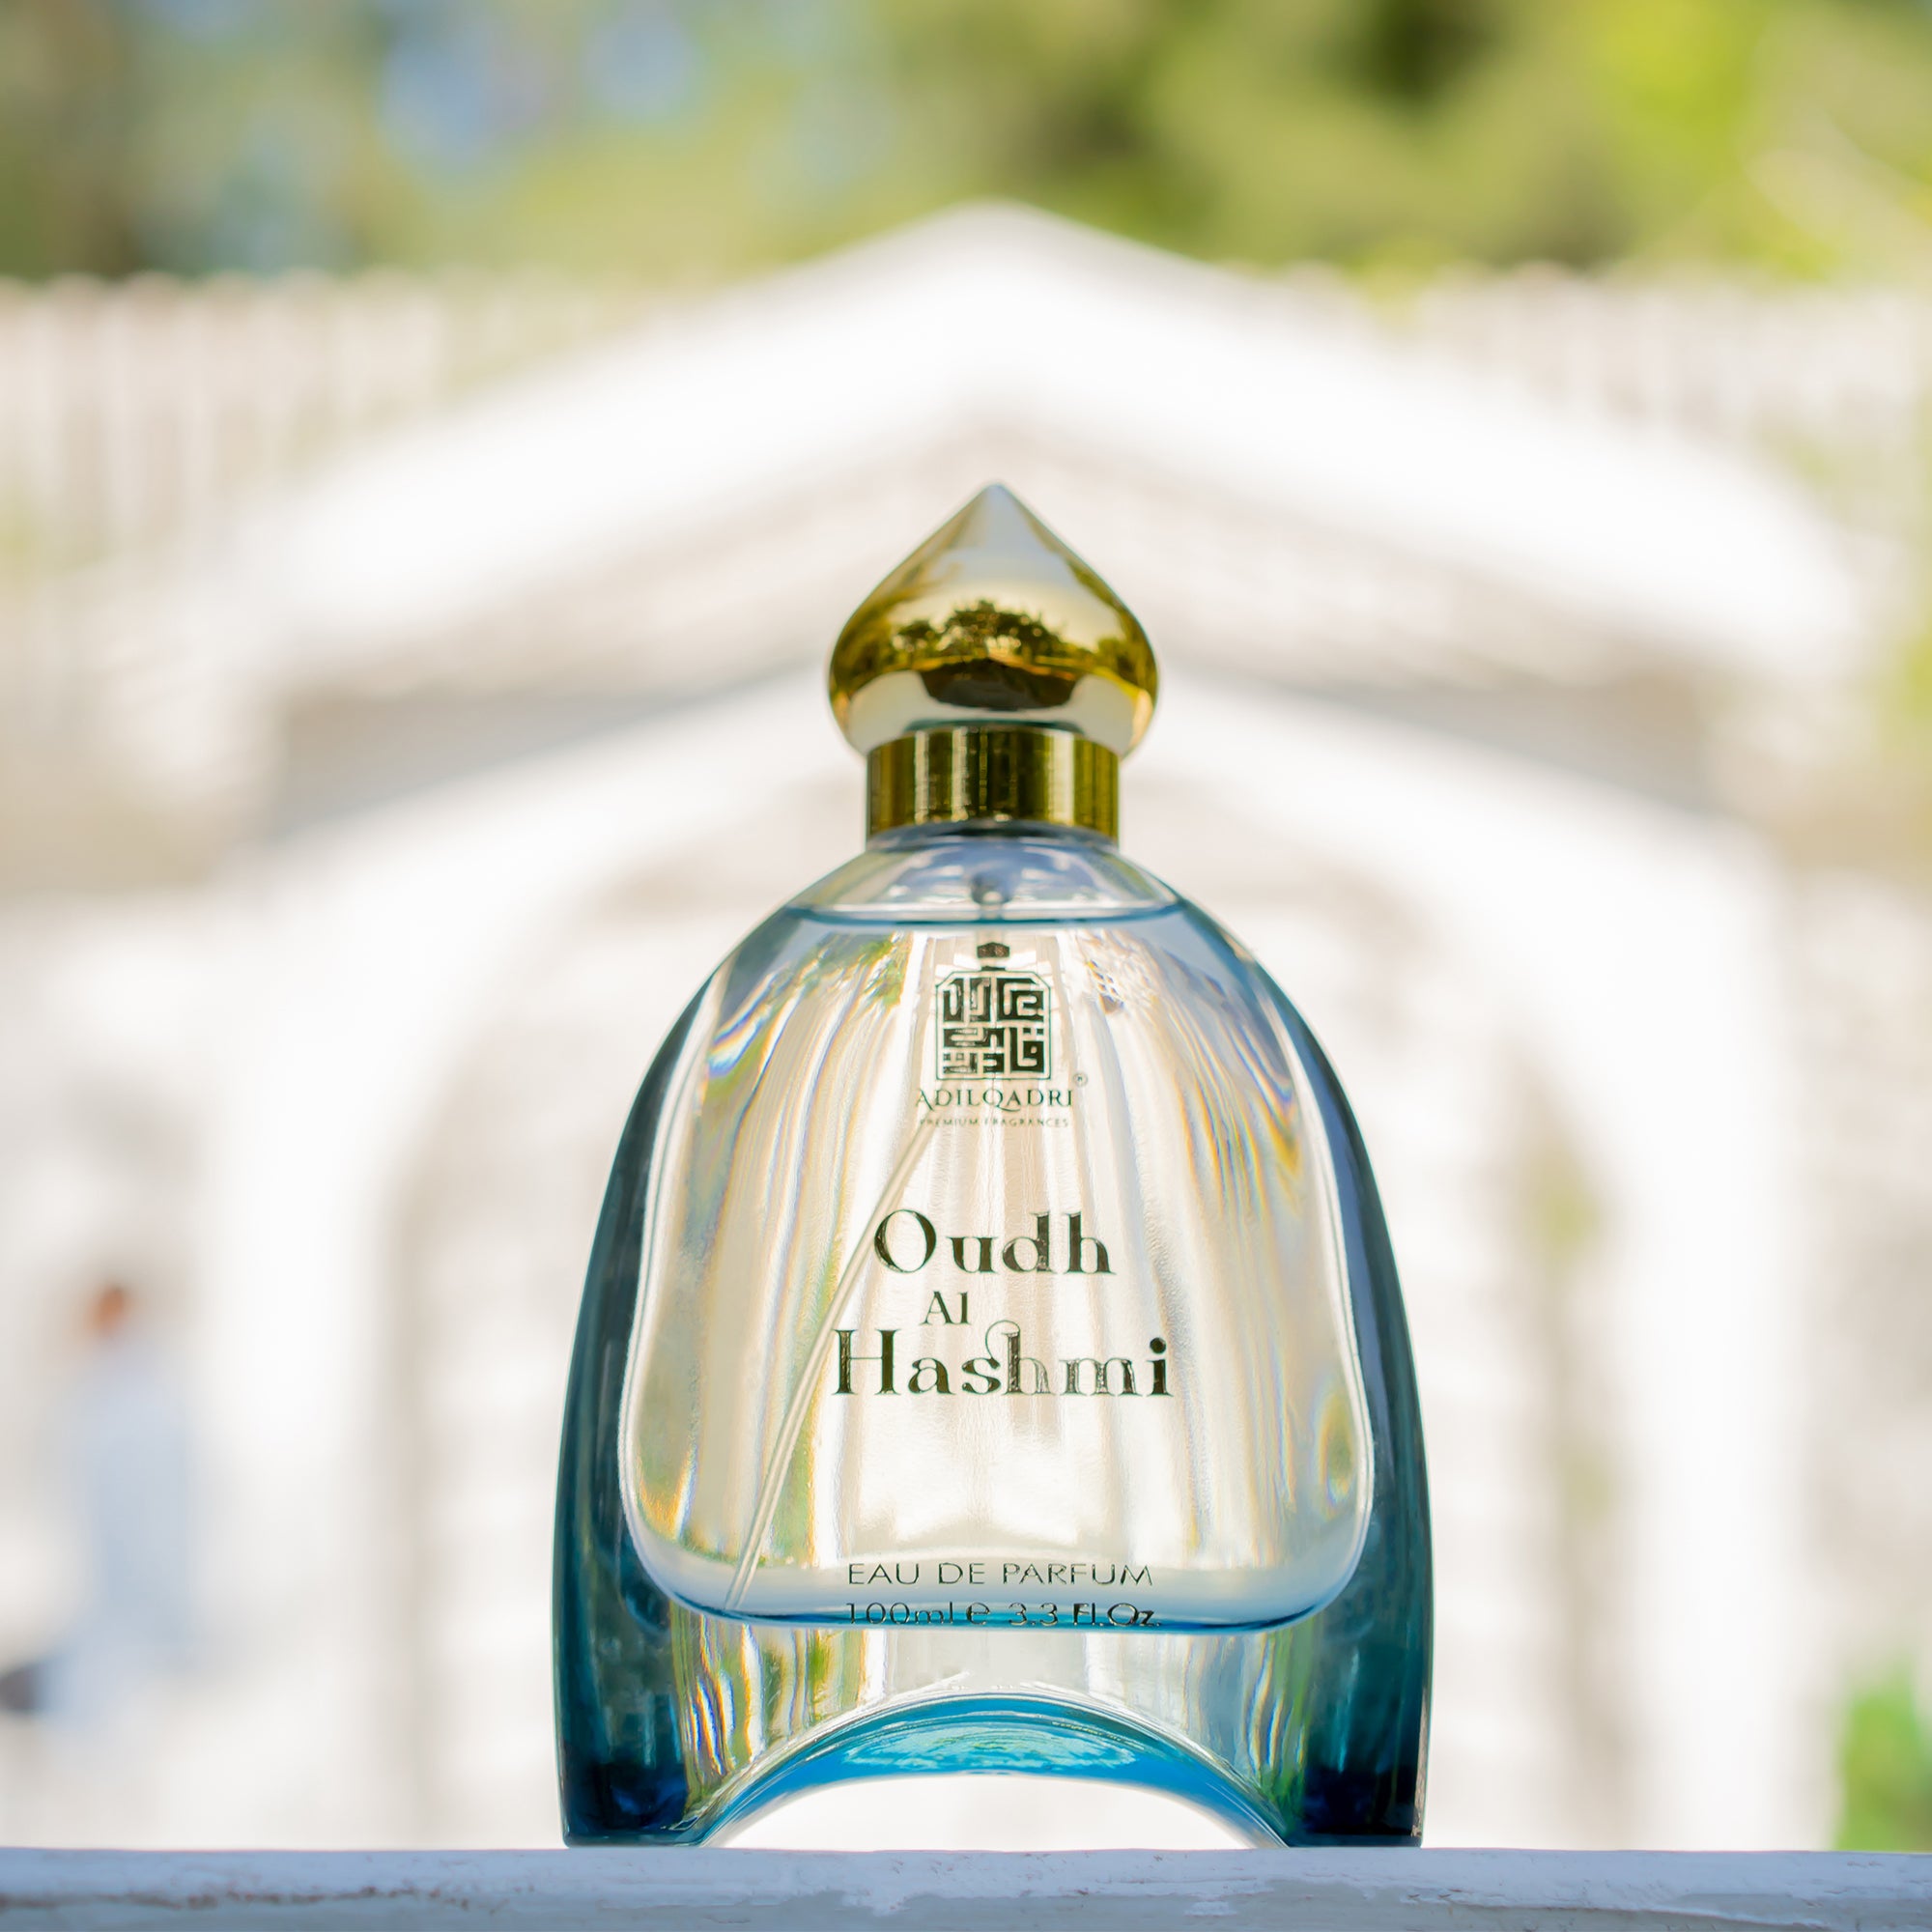 Oudh Al Hashmi Perfume Spray